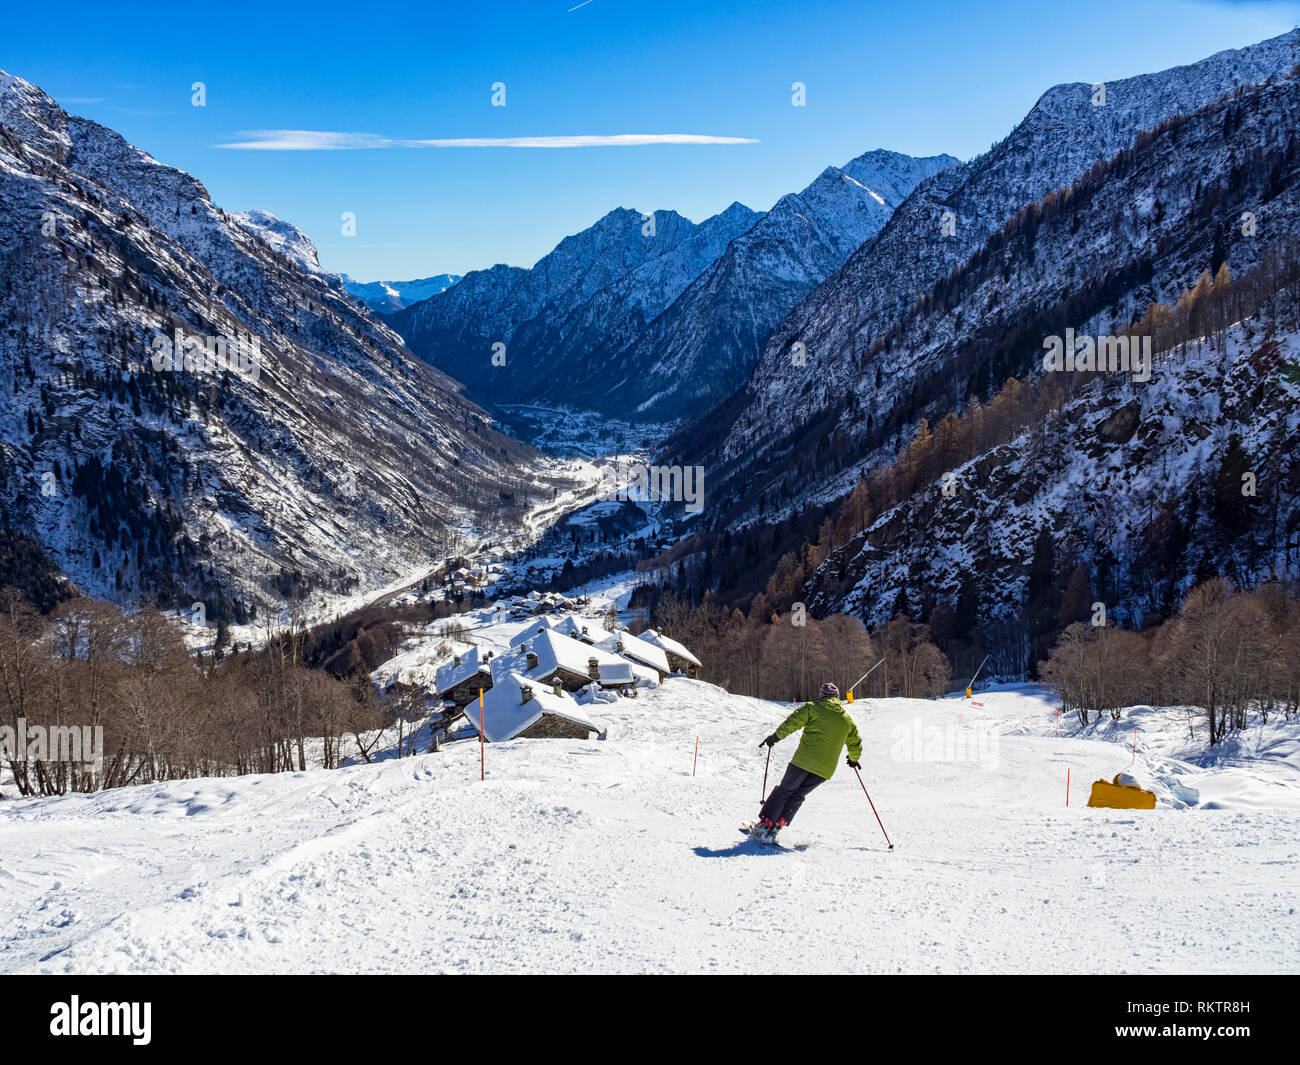 Skier in the alps Stock Photo